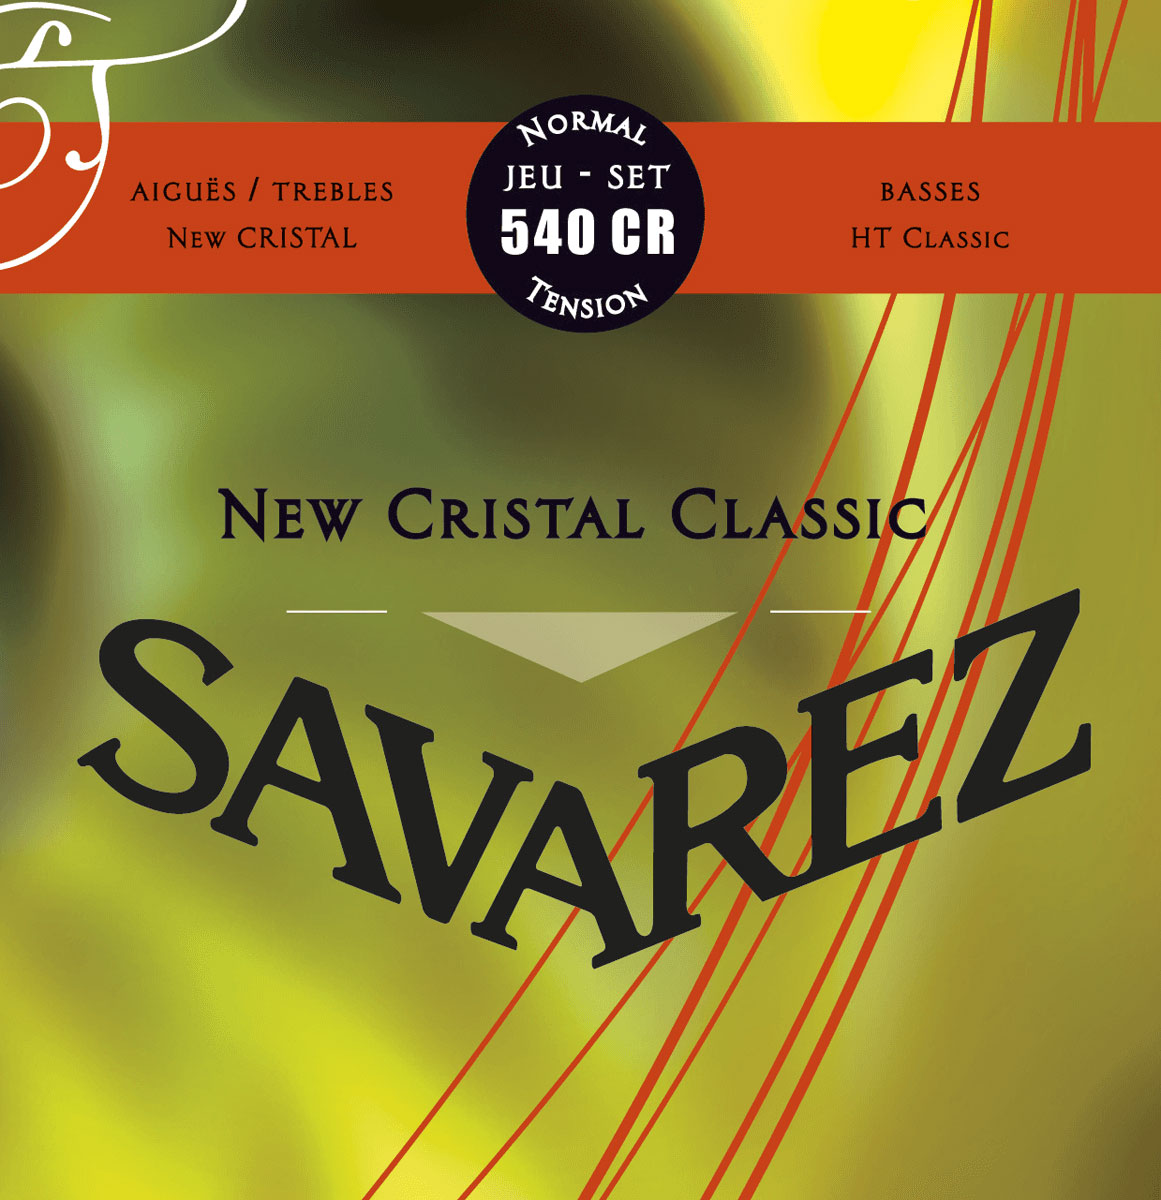 SAVAREZ 540CR NEW CRISTAL CLASSIC TIRANT NORMAL